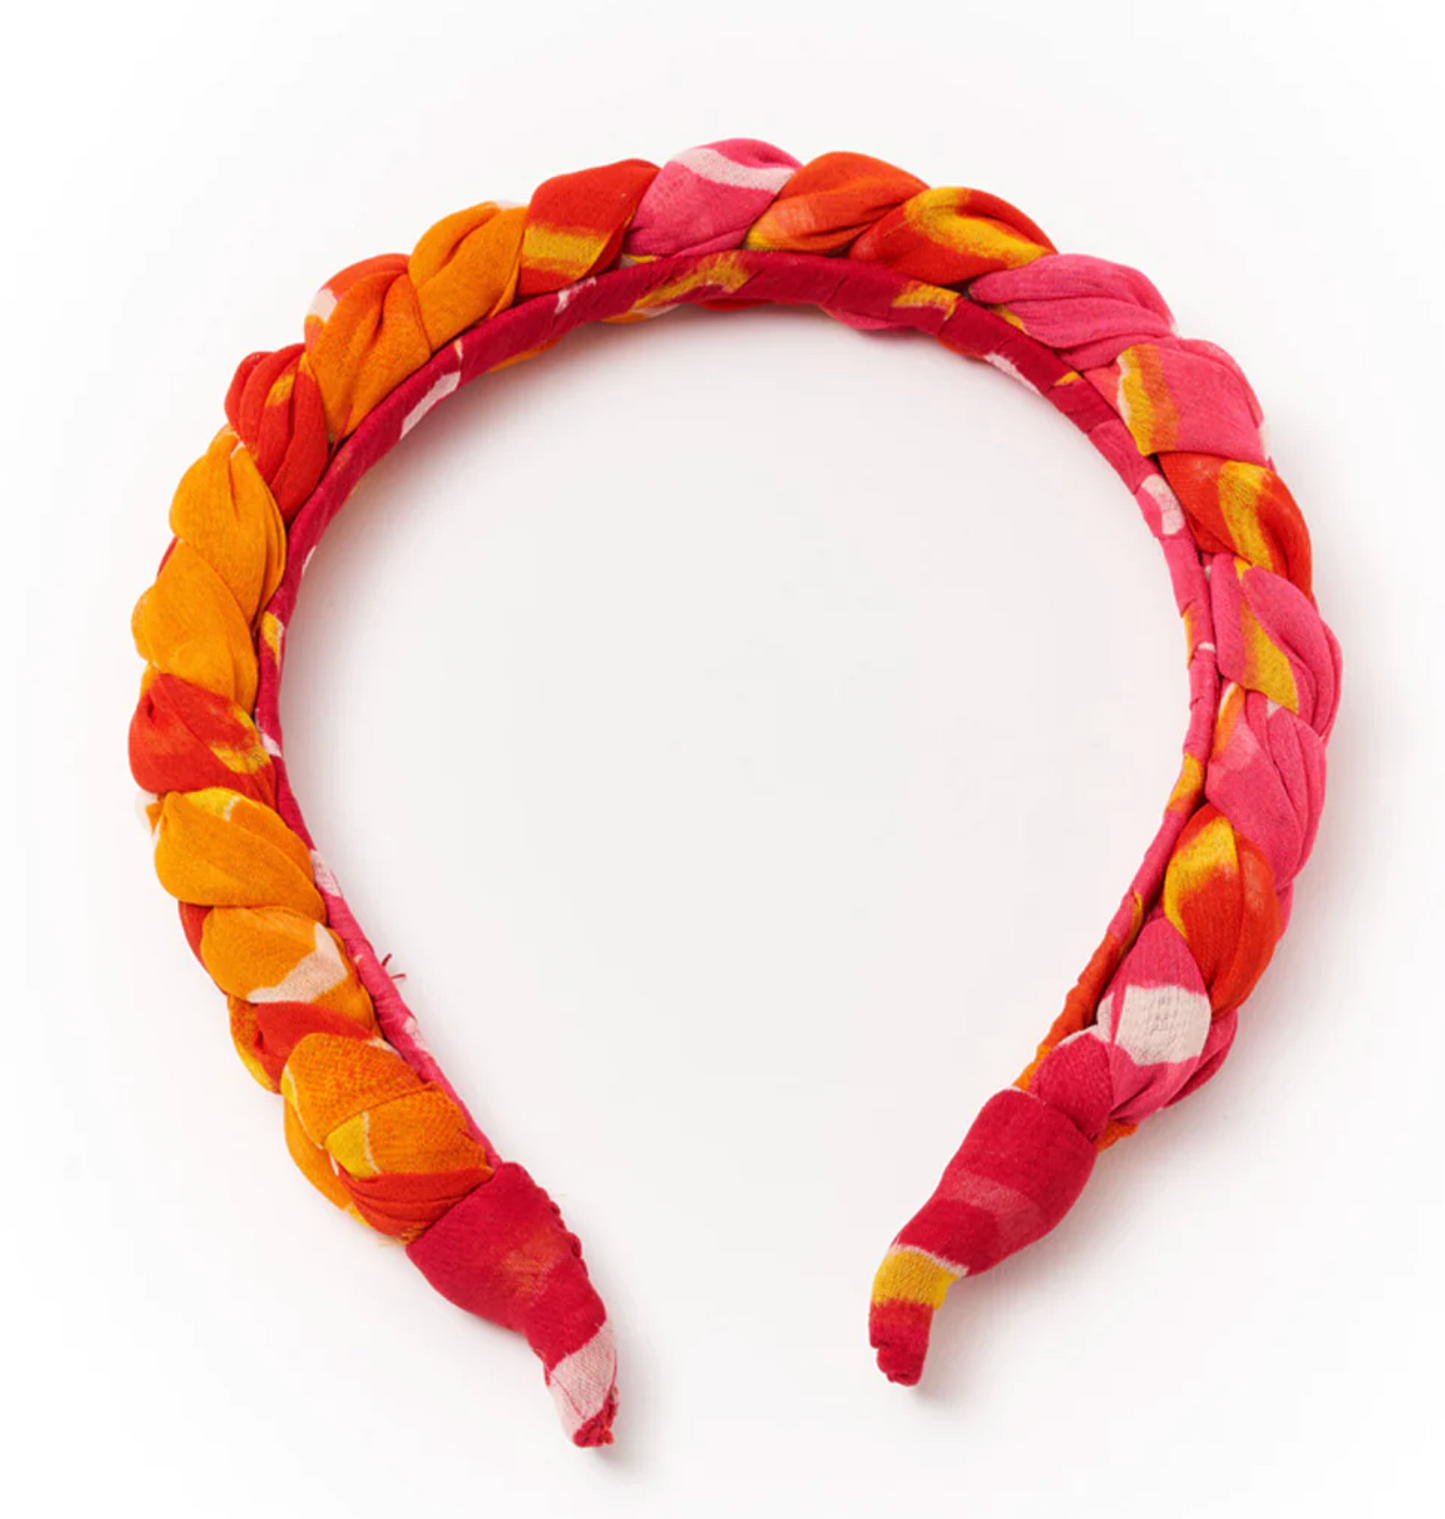 Braided Upcycled Sari Headband